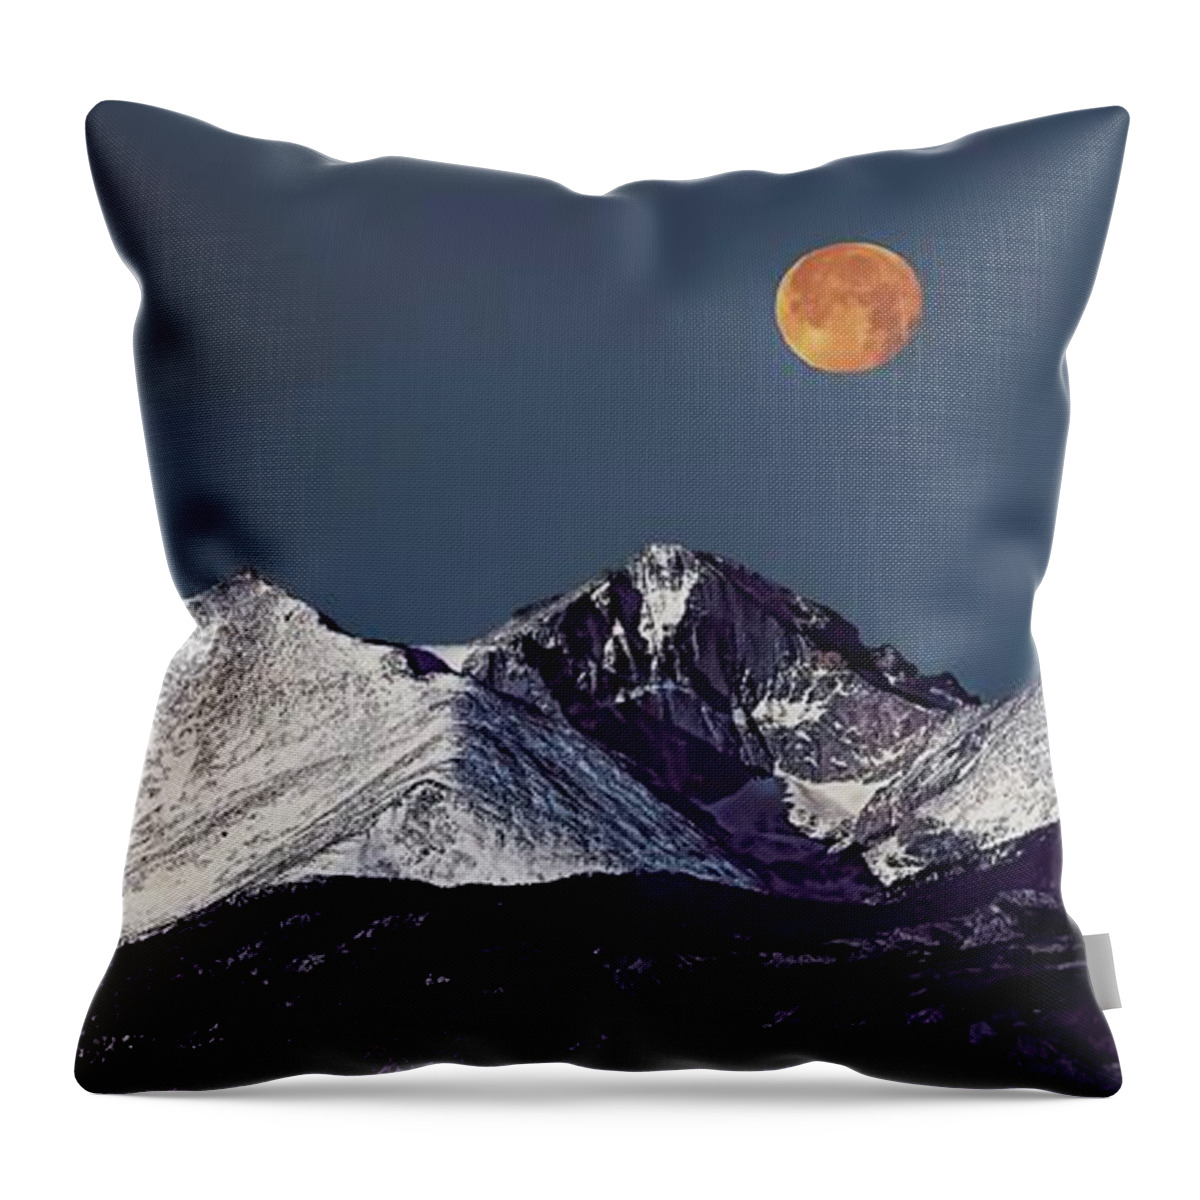 Jon Burch Throw Pillow featuring the photograph Supermoon Lunar Eclipse Over Longs Peak by Jon Burch Photography